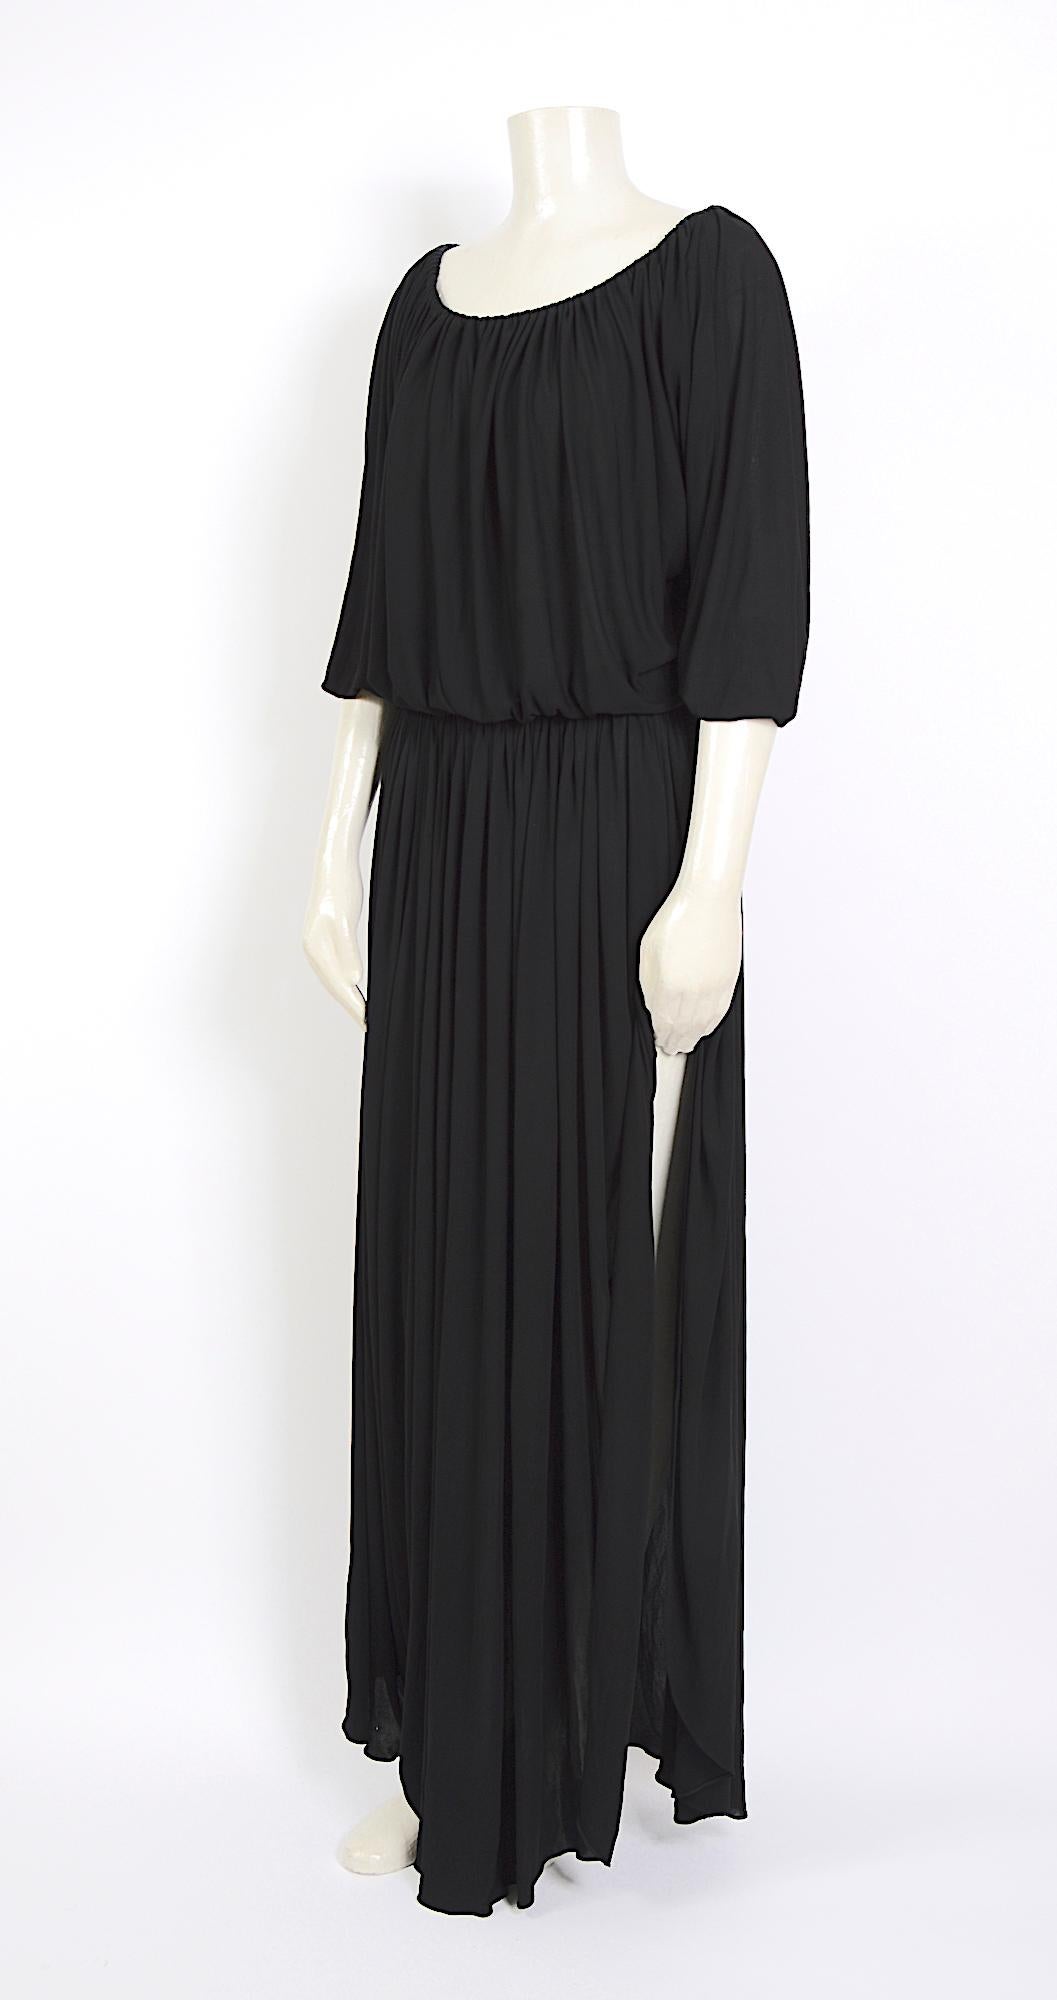 Nina Ricci vintage 1970s black viscose jersey Grecian style draped dress For Sale 1